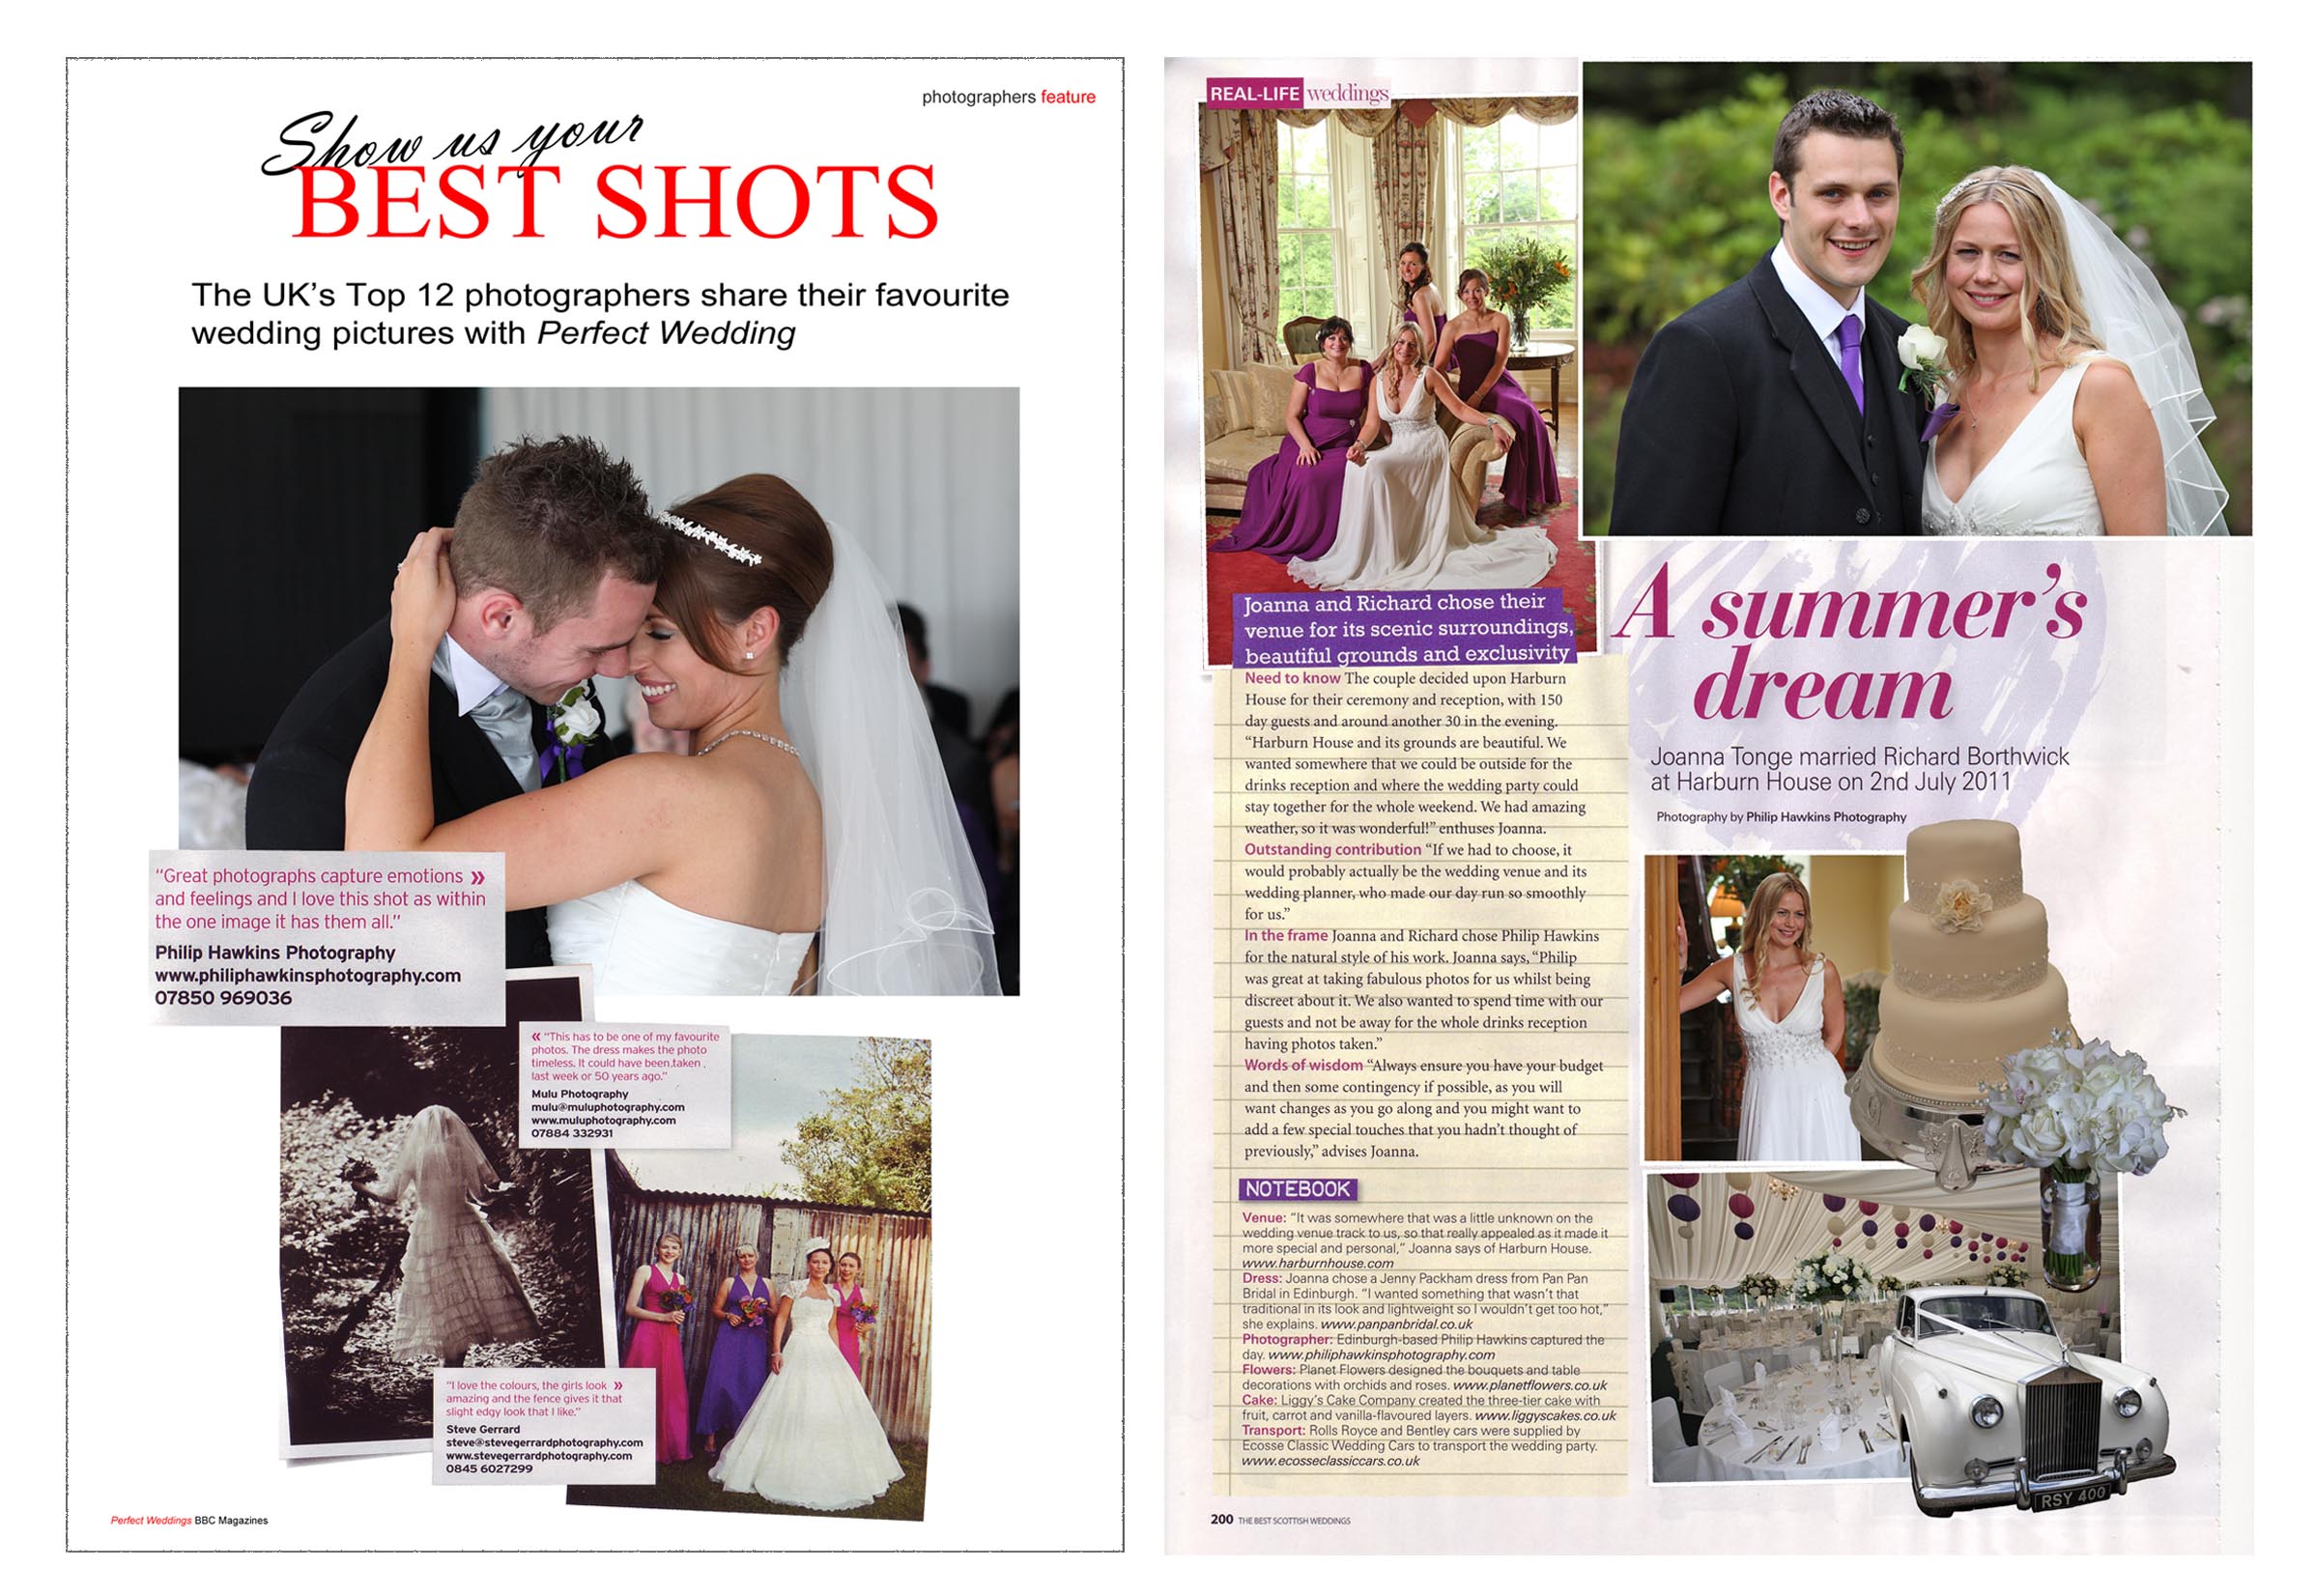 Wedding Photography magazine features